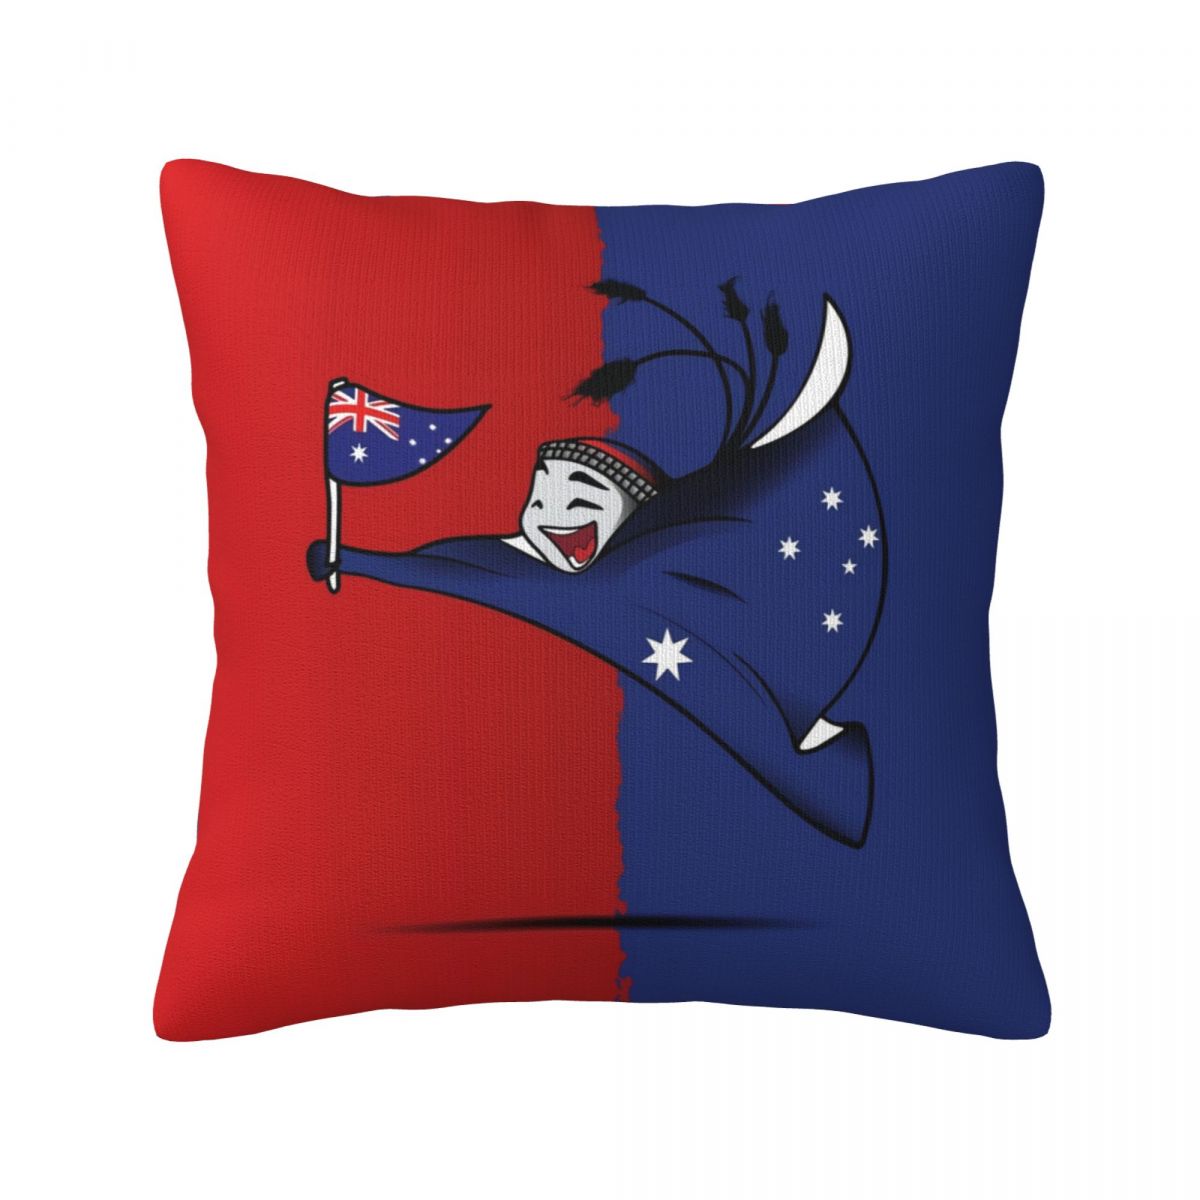 Australia World Cup 2022 Mascot Throw Pillow Covers 18x18